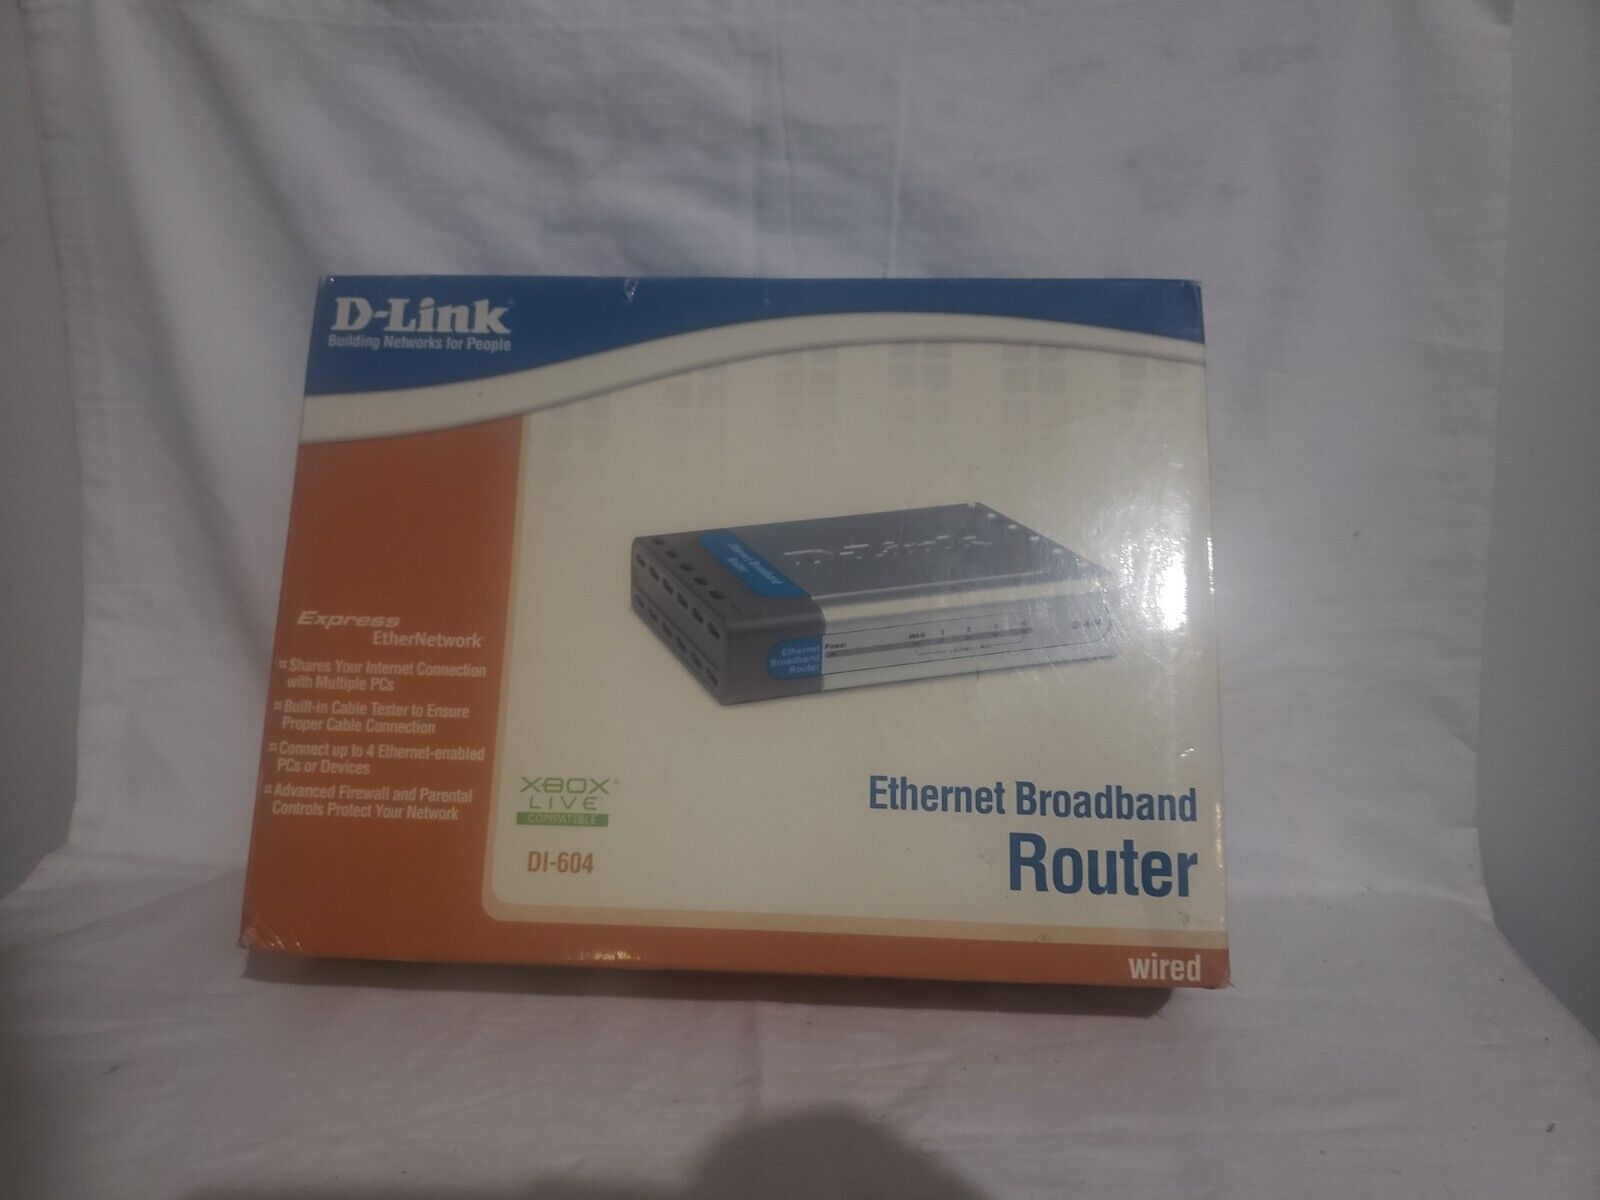 D-Link Express Ethernet Broadband Router DI-604